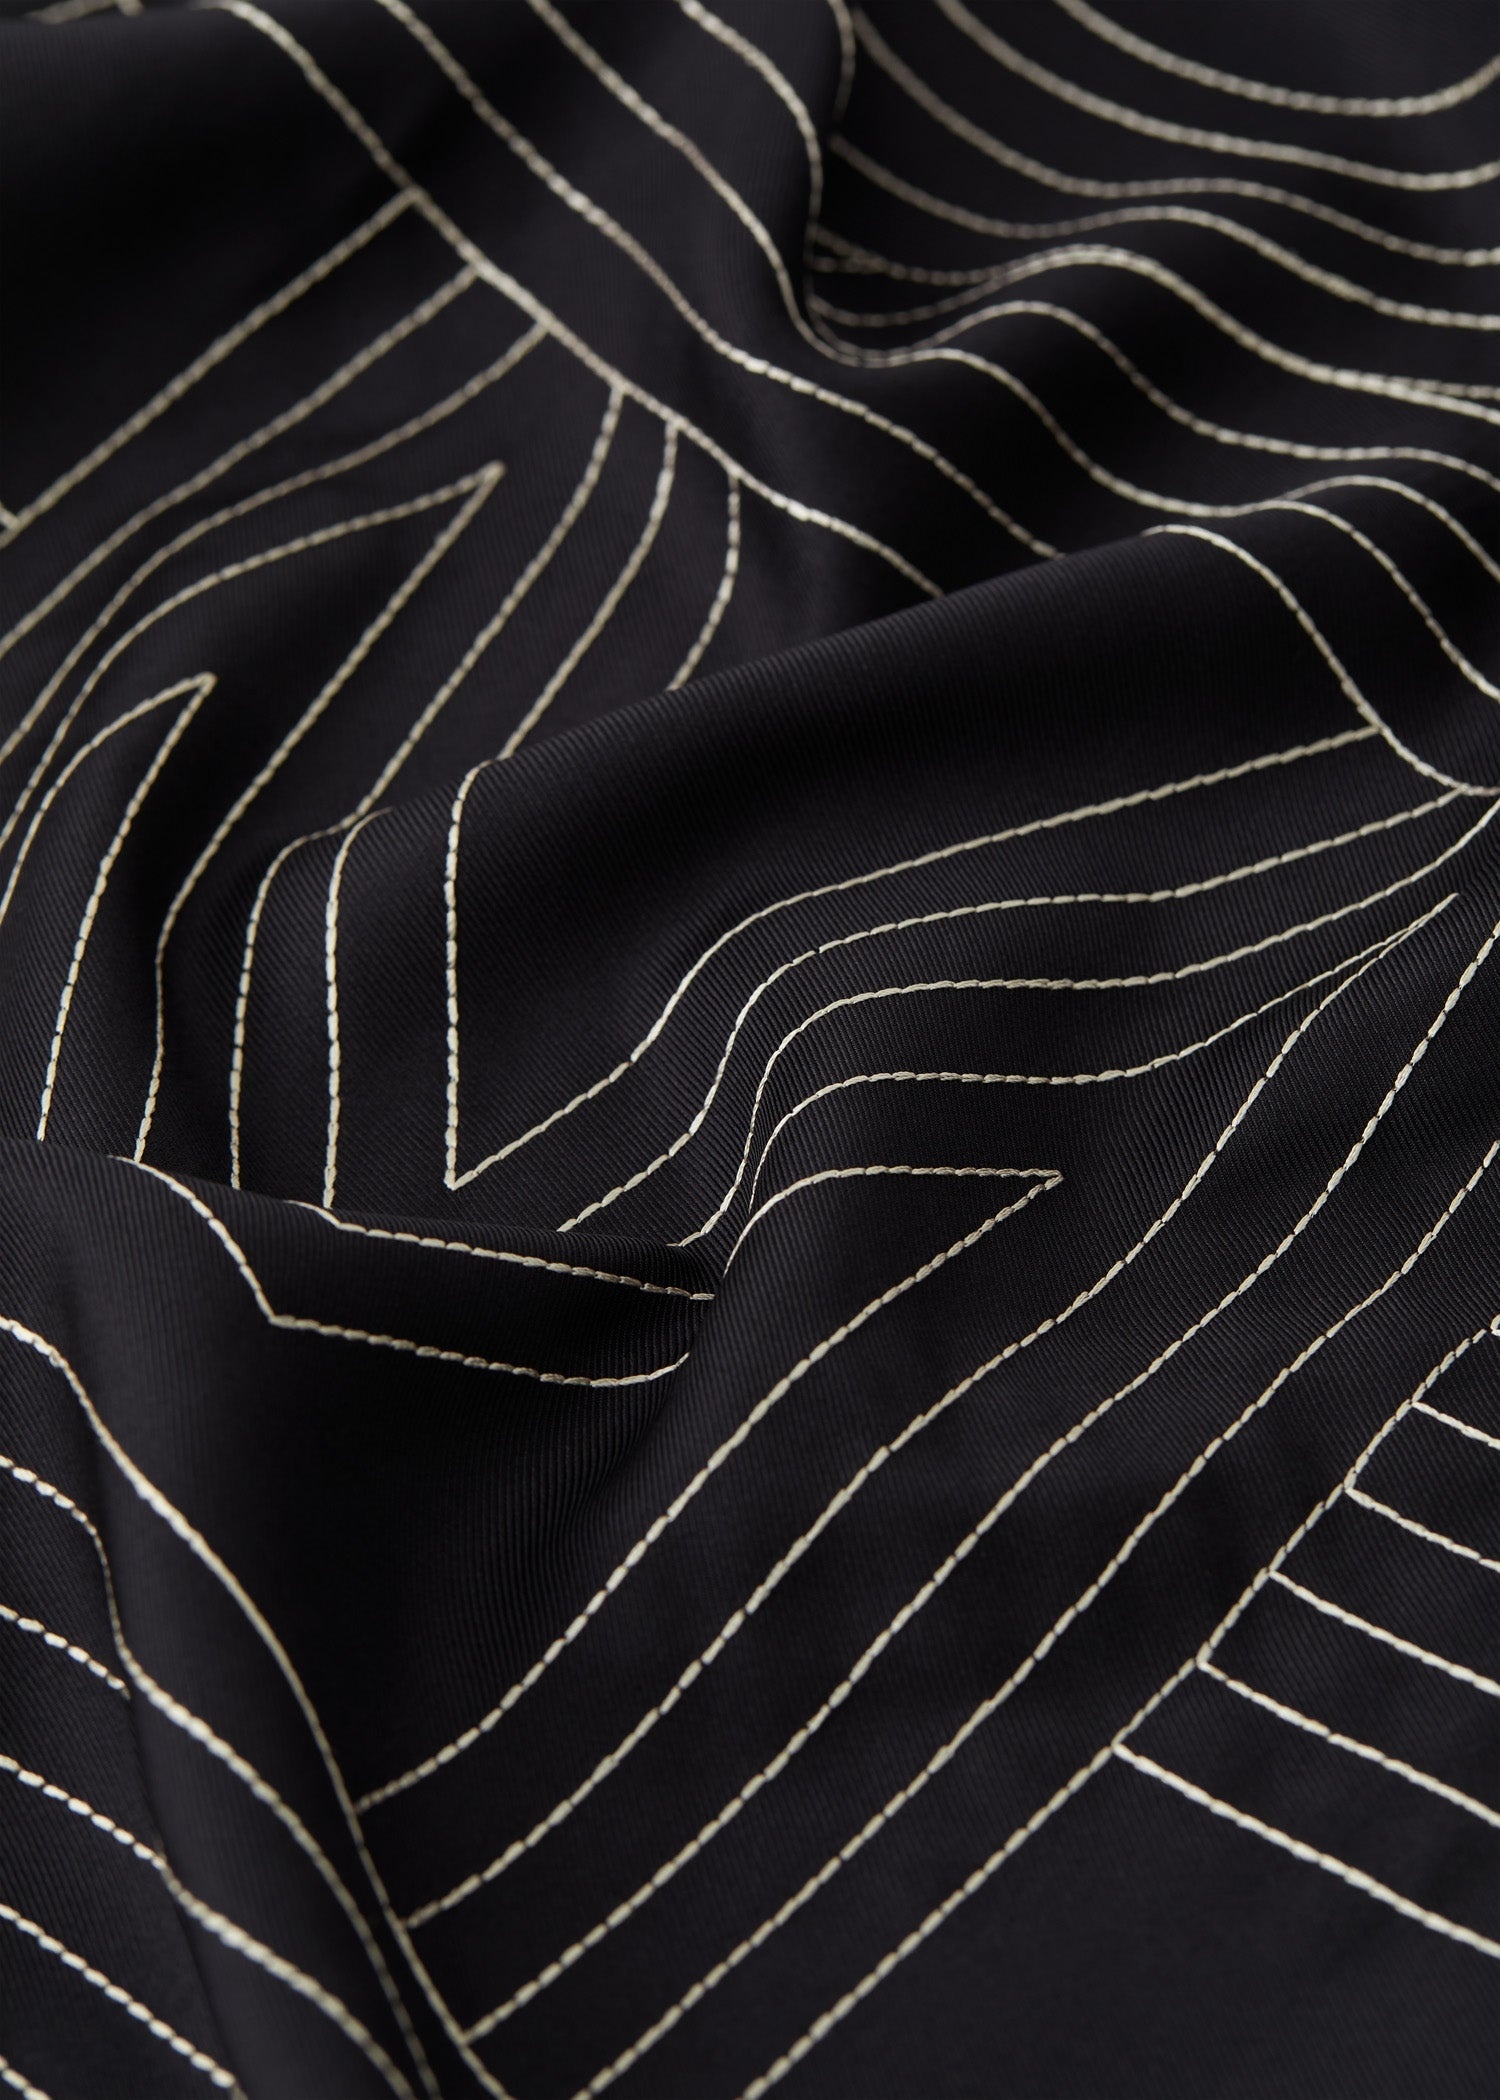 Striped embroidered monogram silk scarf black - 5